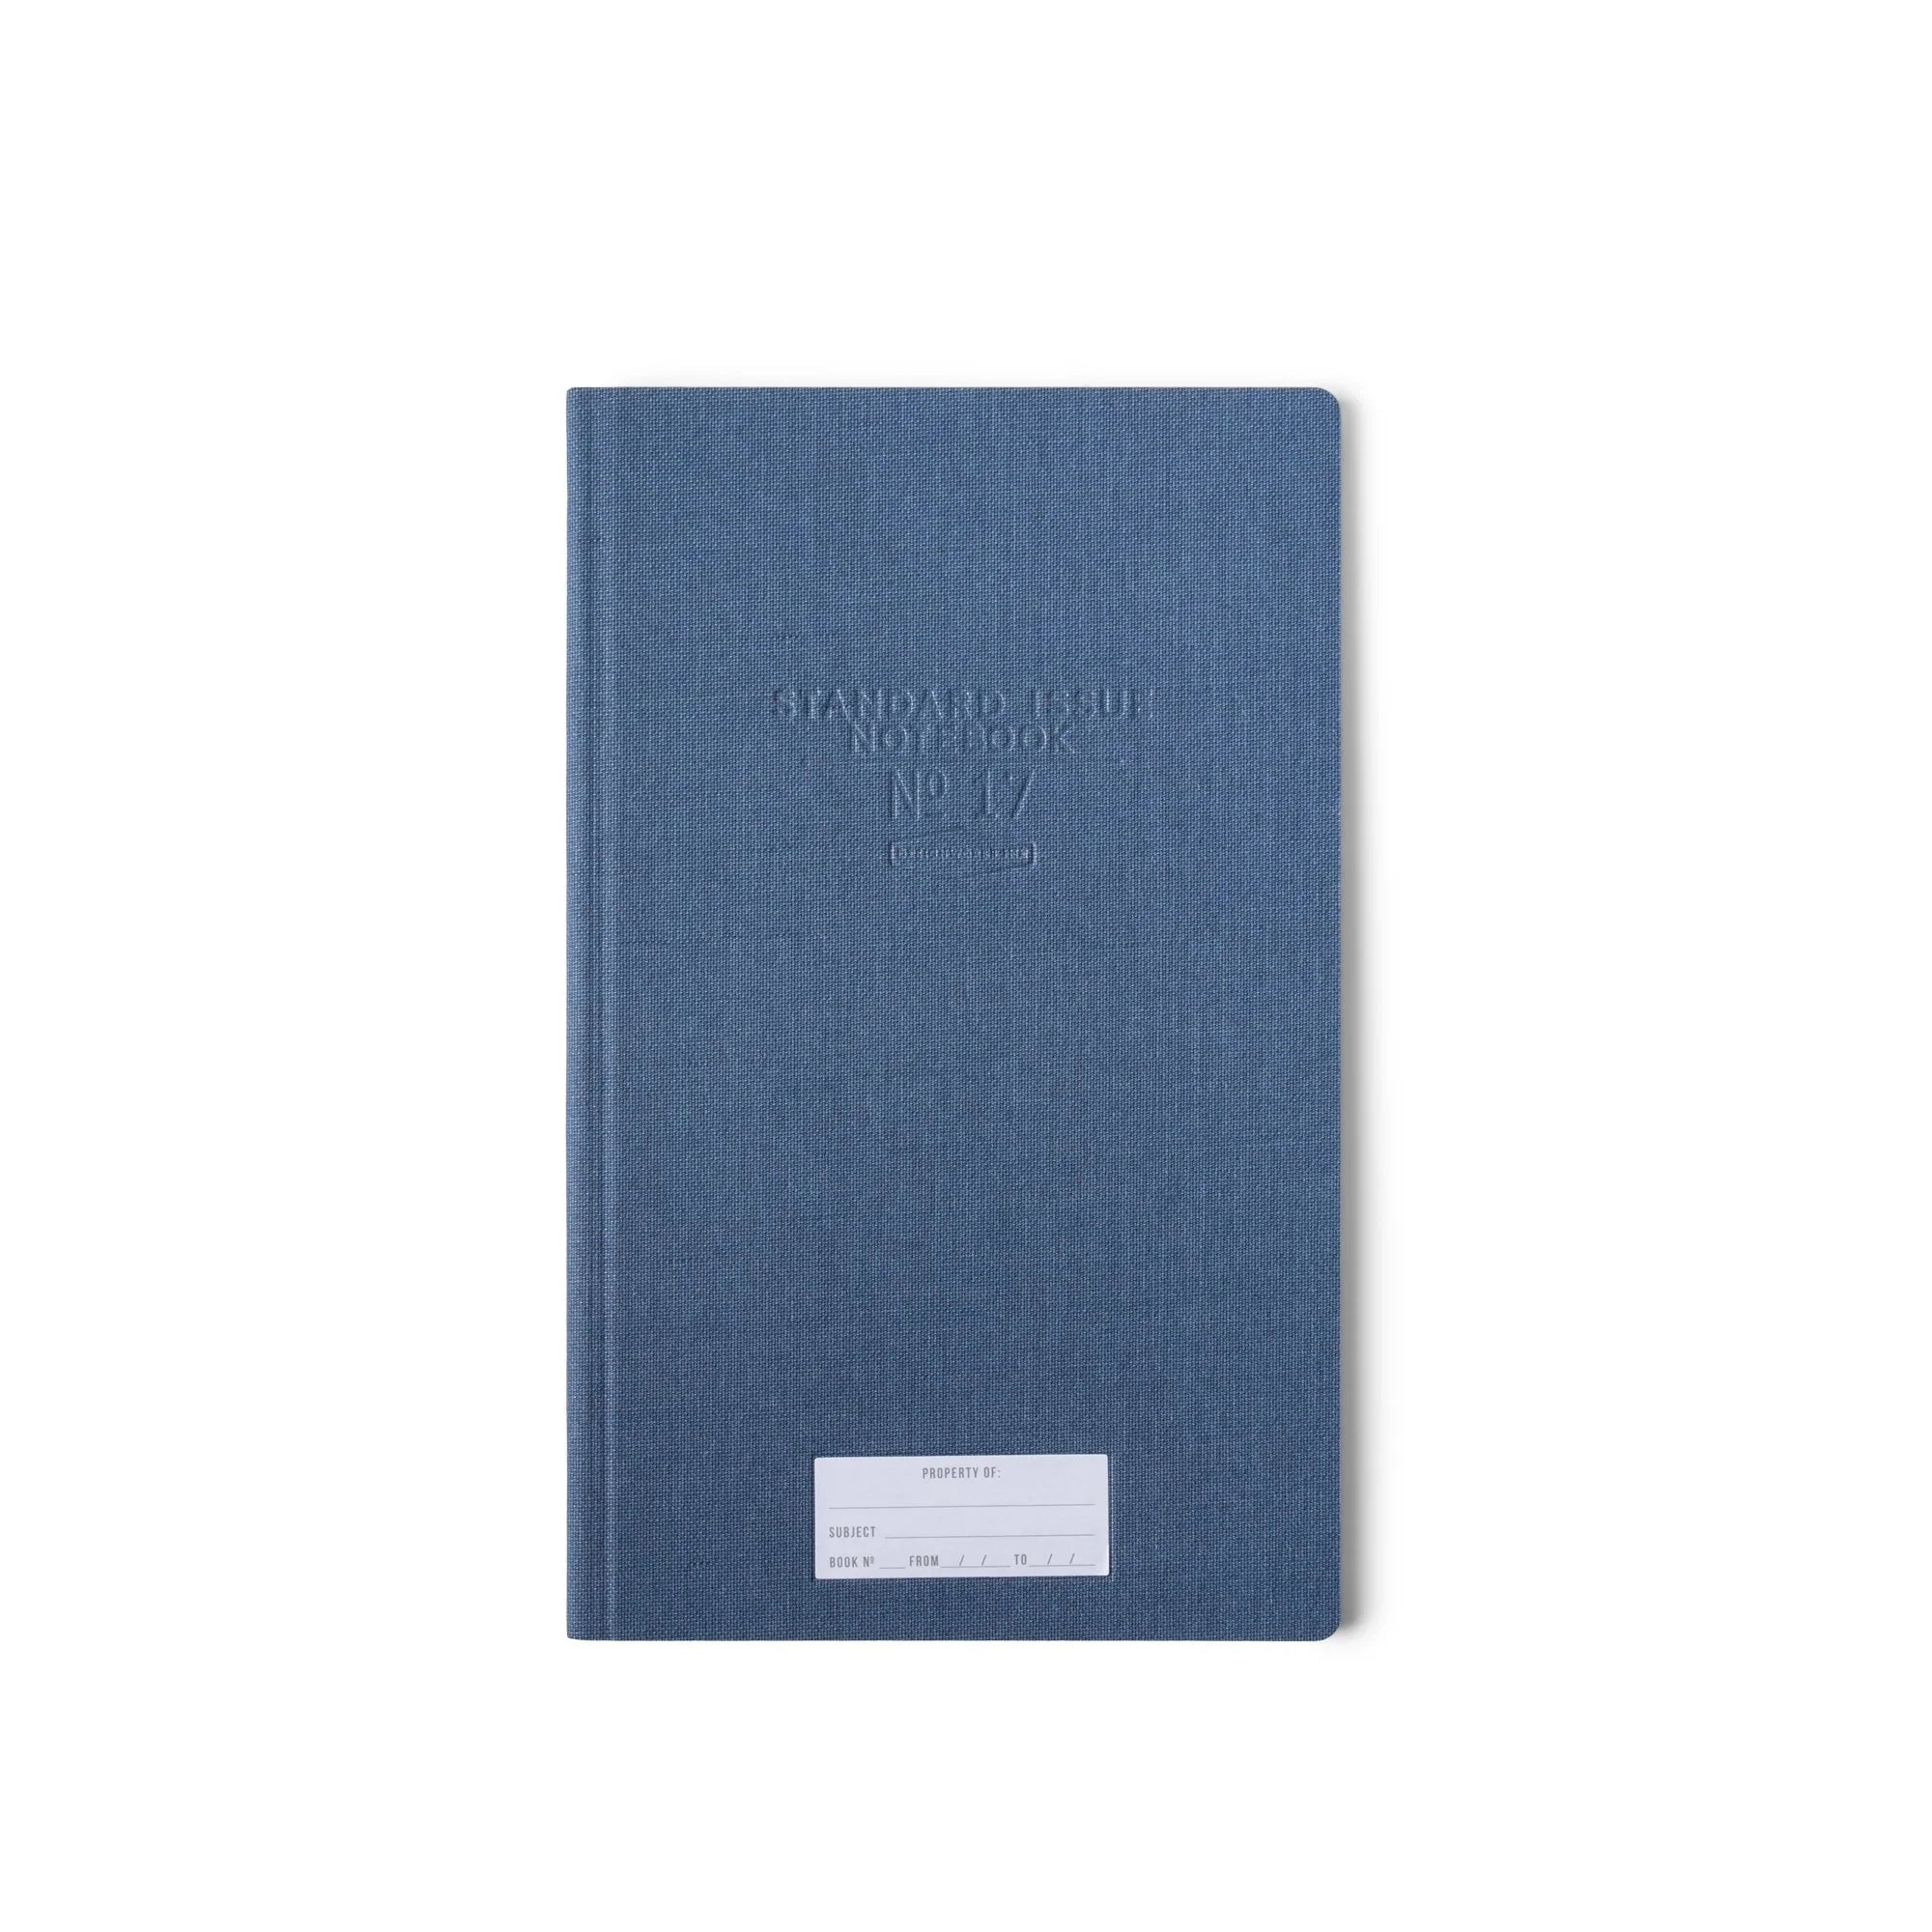 Notebook - Standard Issue No. 17 Blue